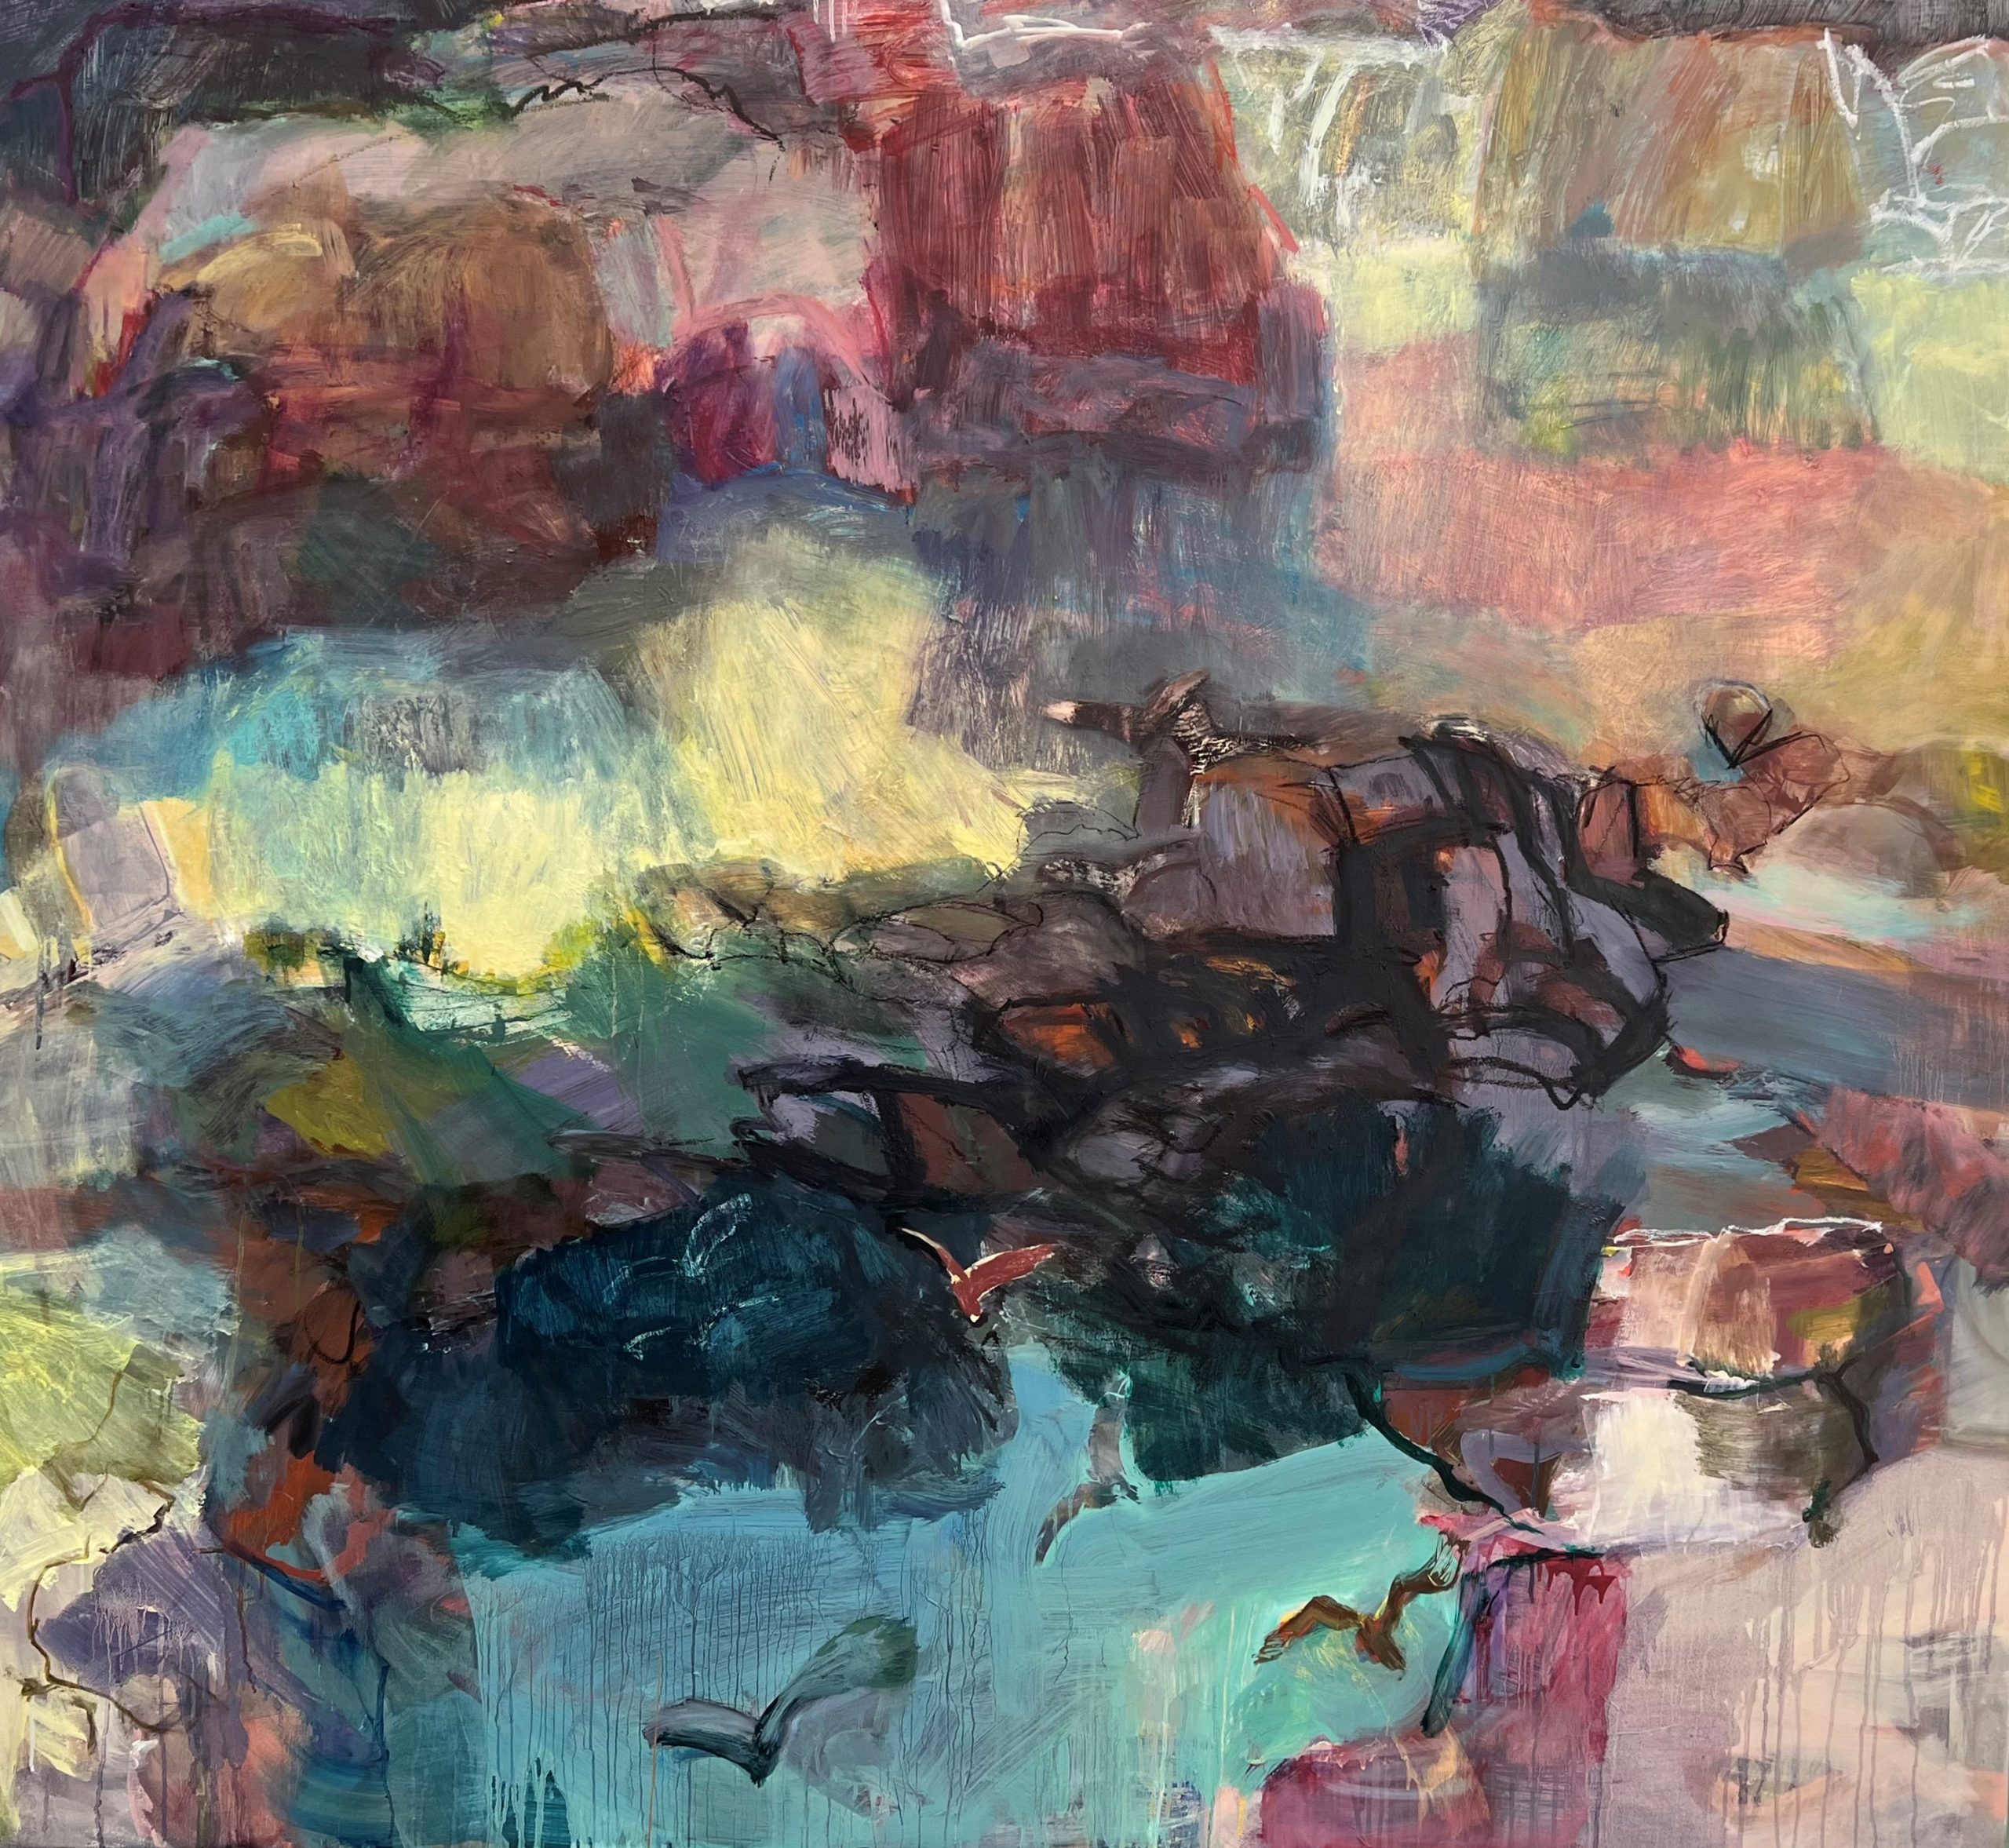 Kerry McInnis 'Shadow Birds' oil and oil stick on canvas 153 x 169cm $17,500